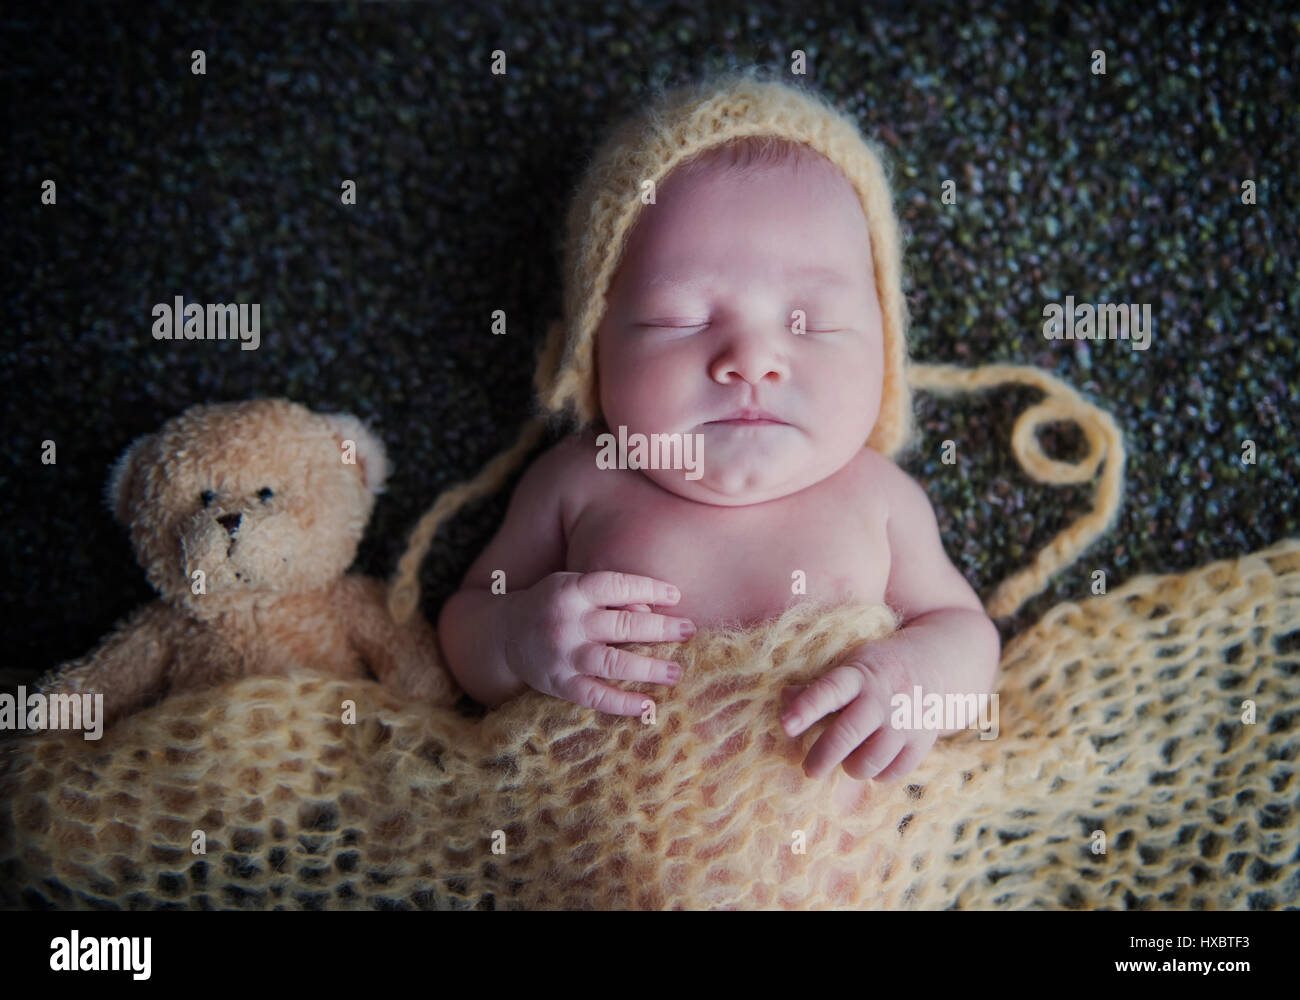 Newborn baby in a cap Stock Photo